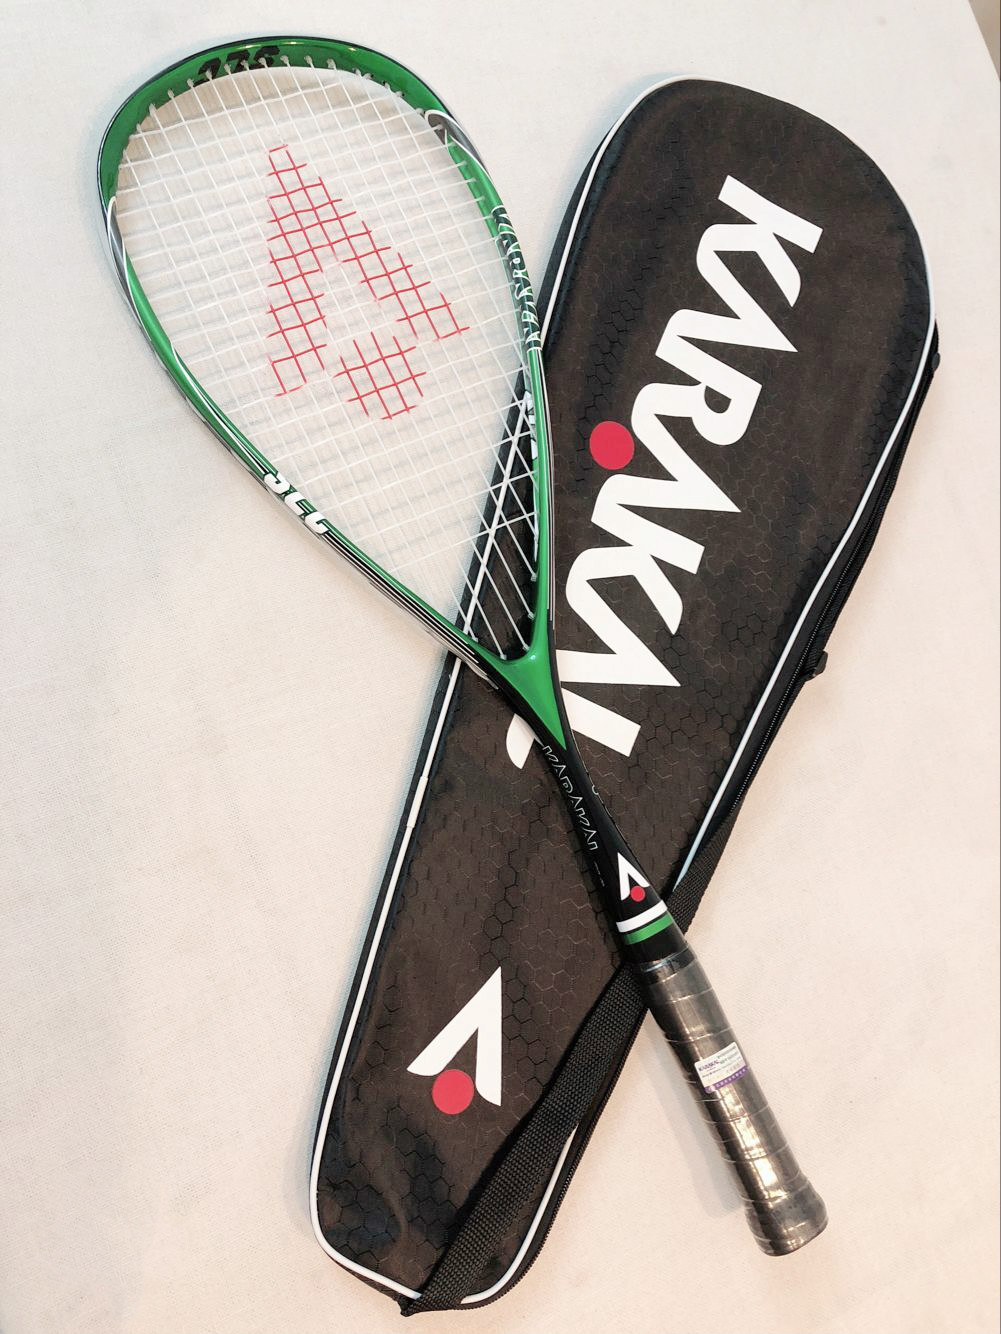 Original Karakal Squash Racket 130g SLC Carbon Fiber Material For Squash Sport Training Match game for Players Learners raquete